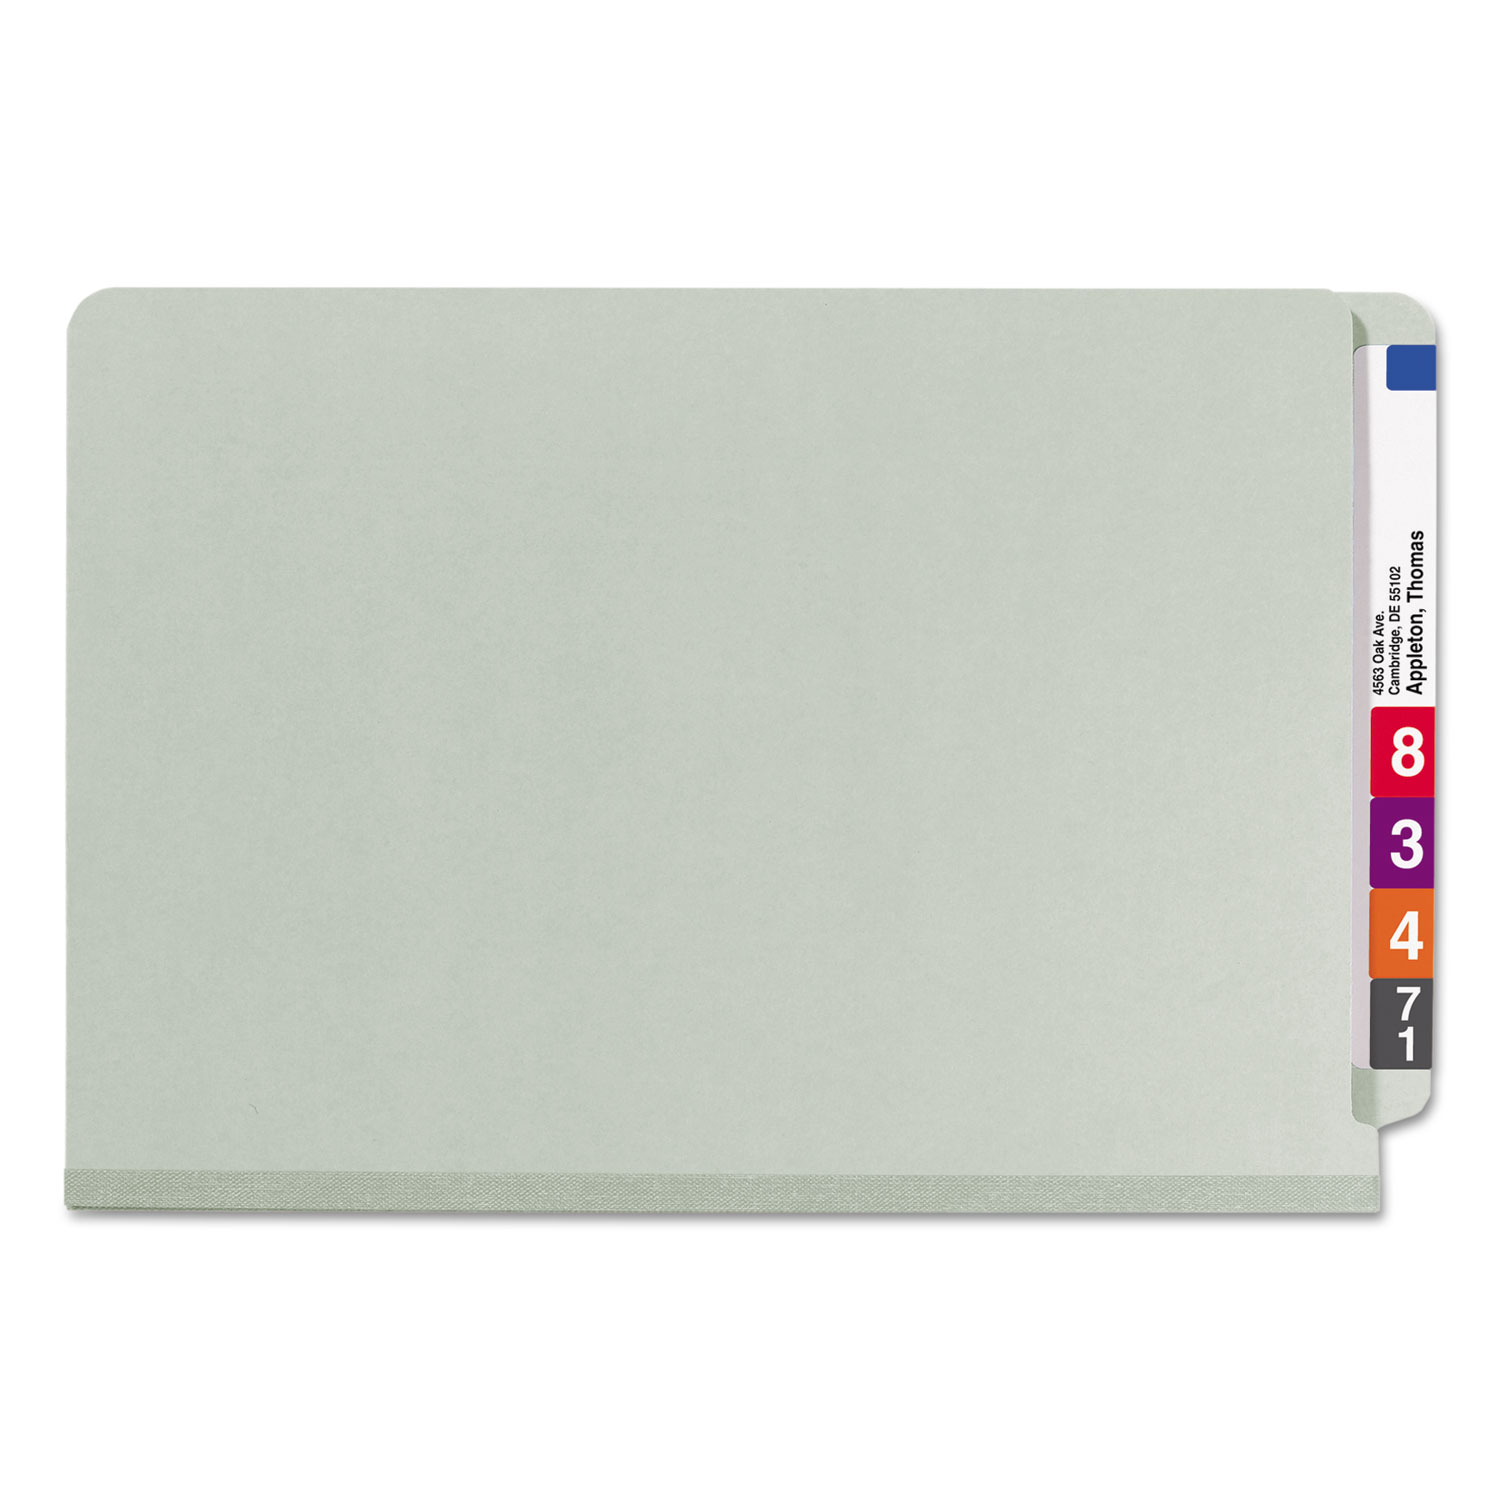 Pressboard End Tab Classification Folder, Legal, Six-Section, Gray/Green, 10/Box